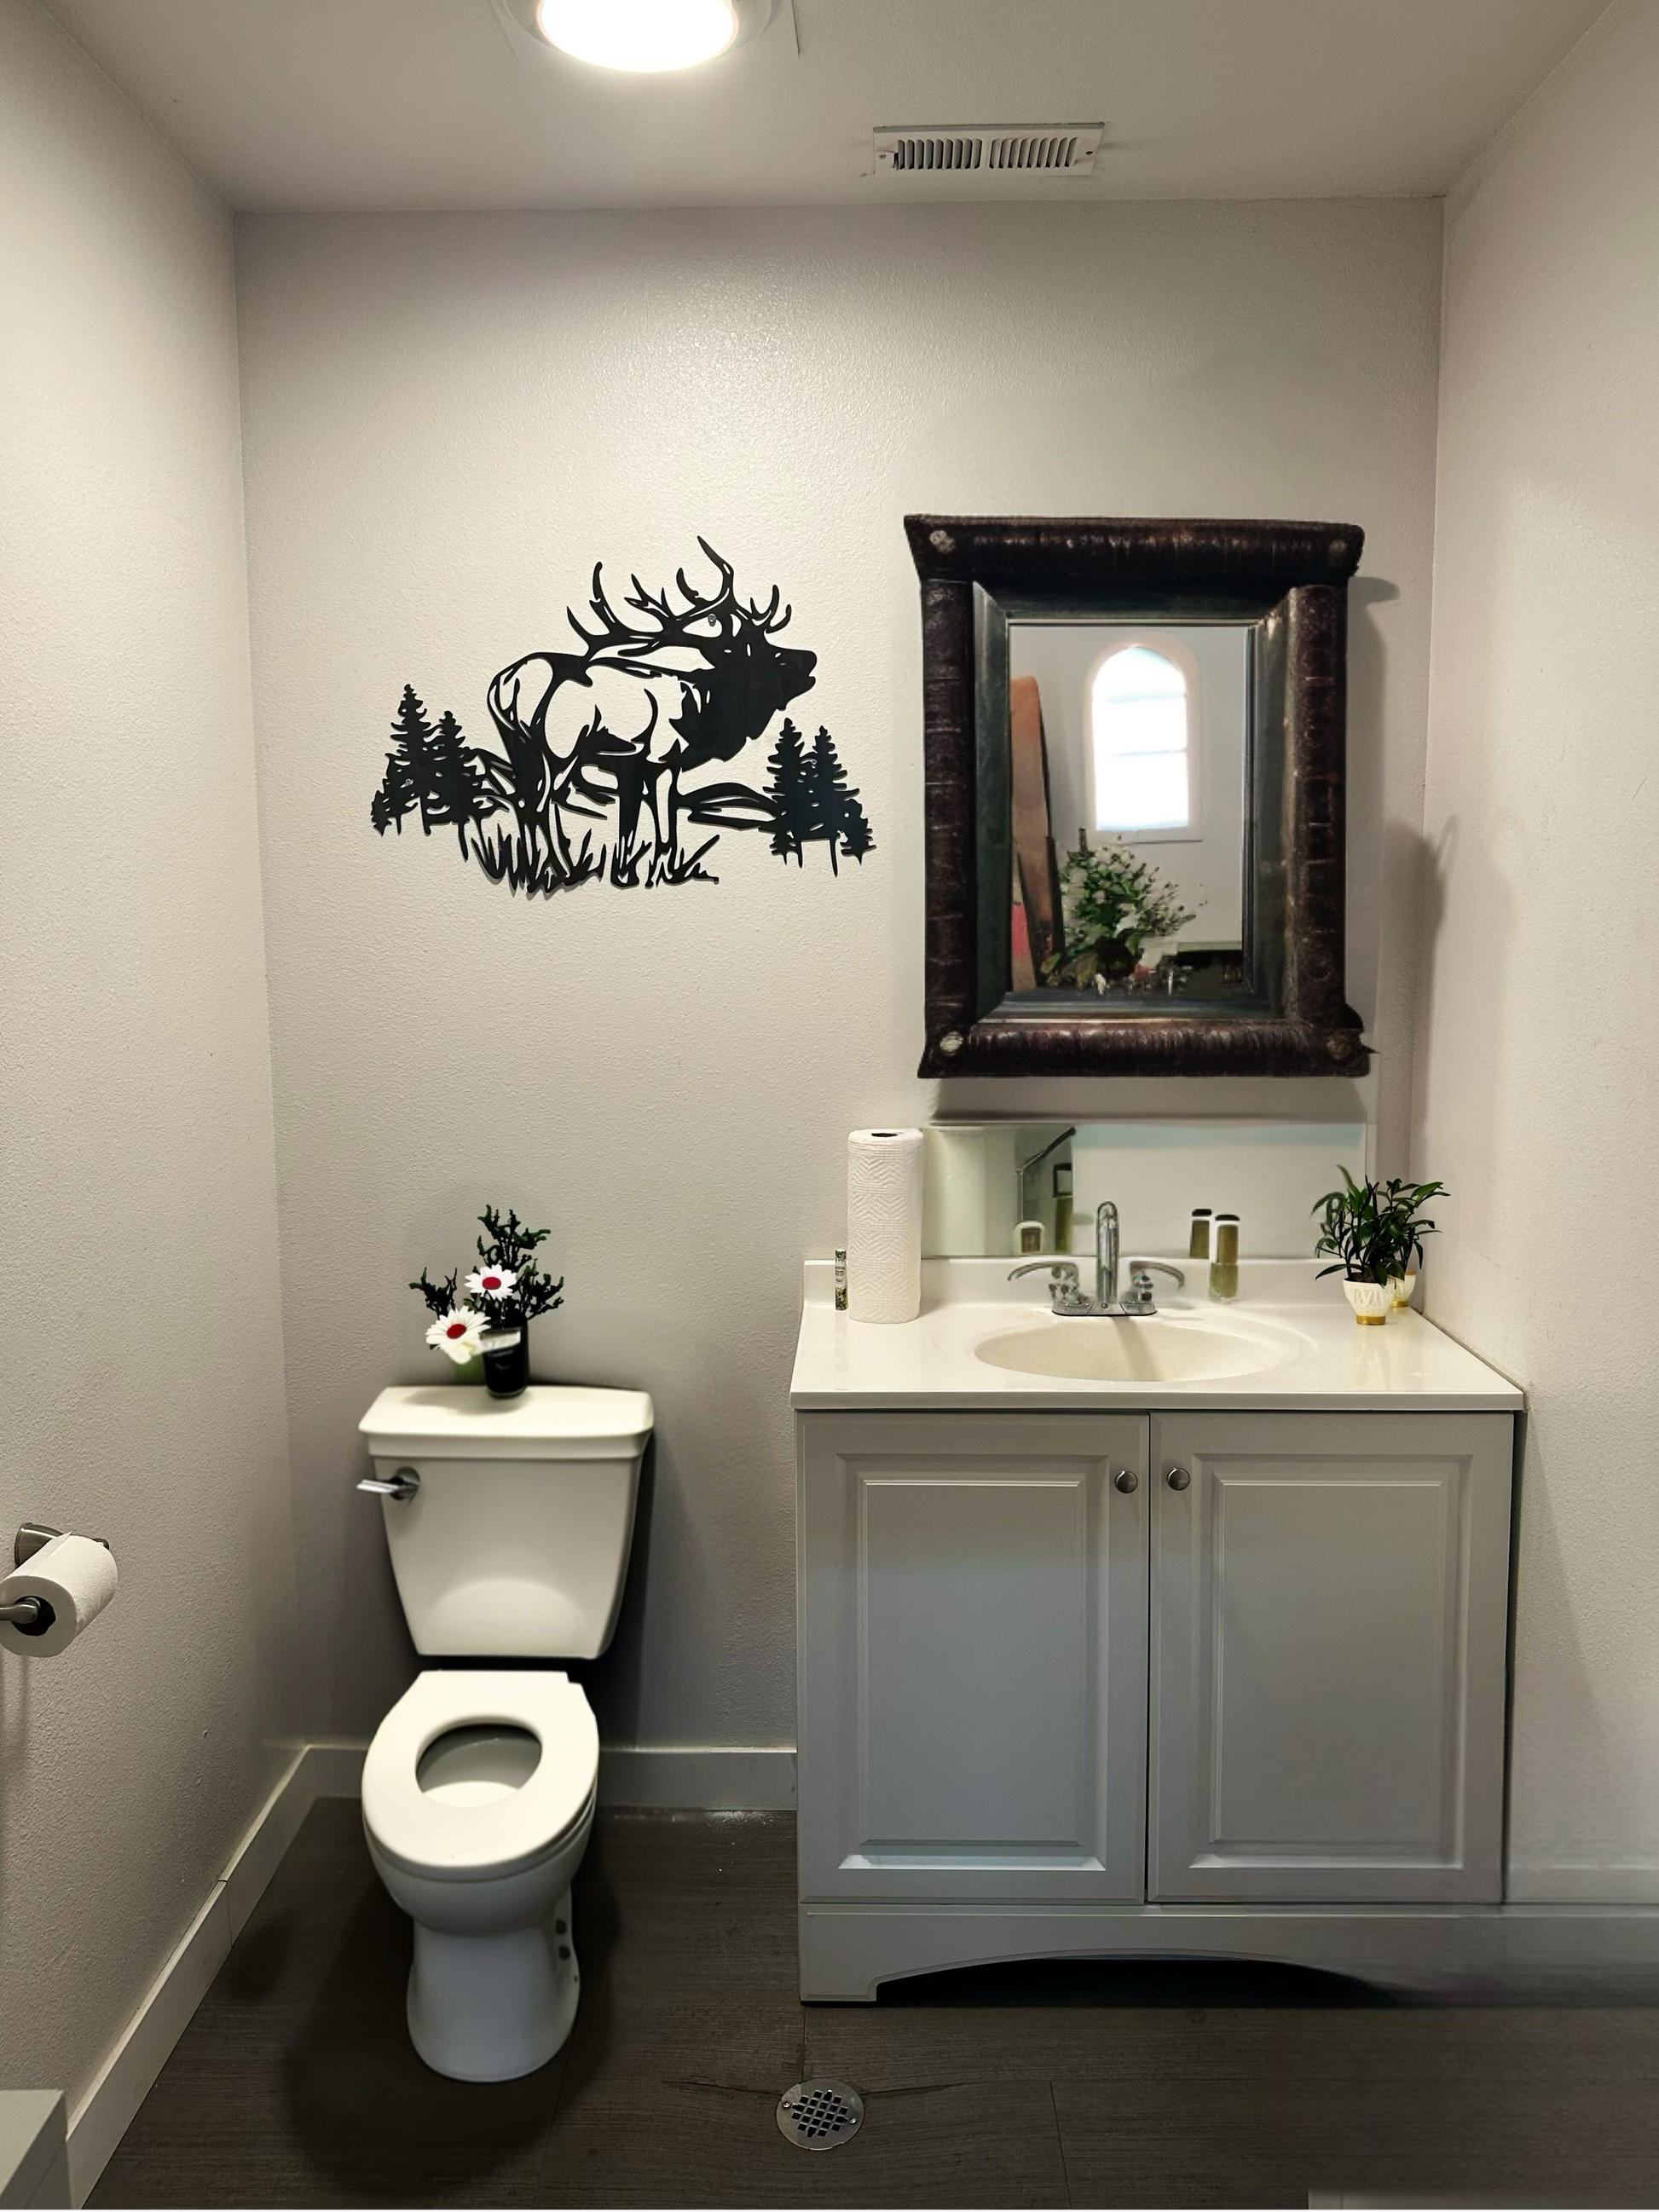 Metal Elk Decorative Steel Sign in Bathroom